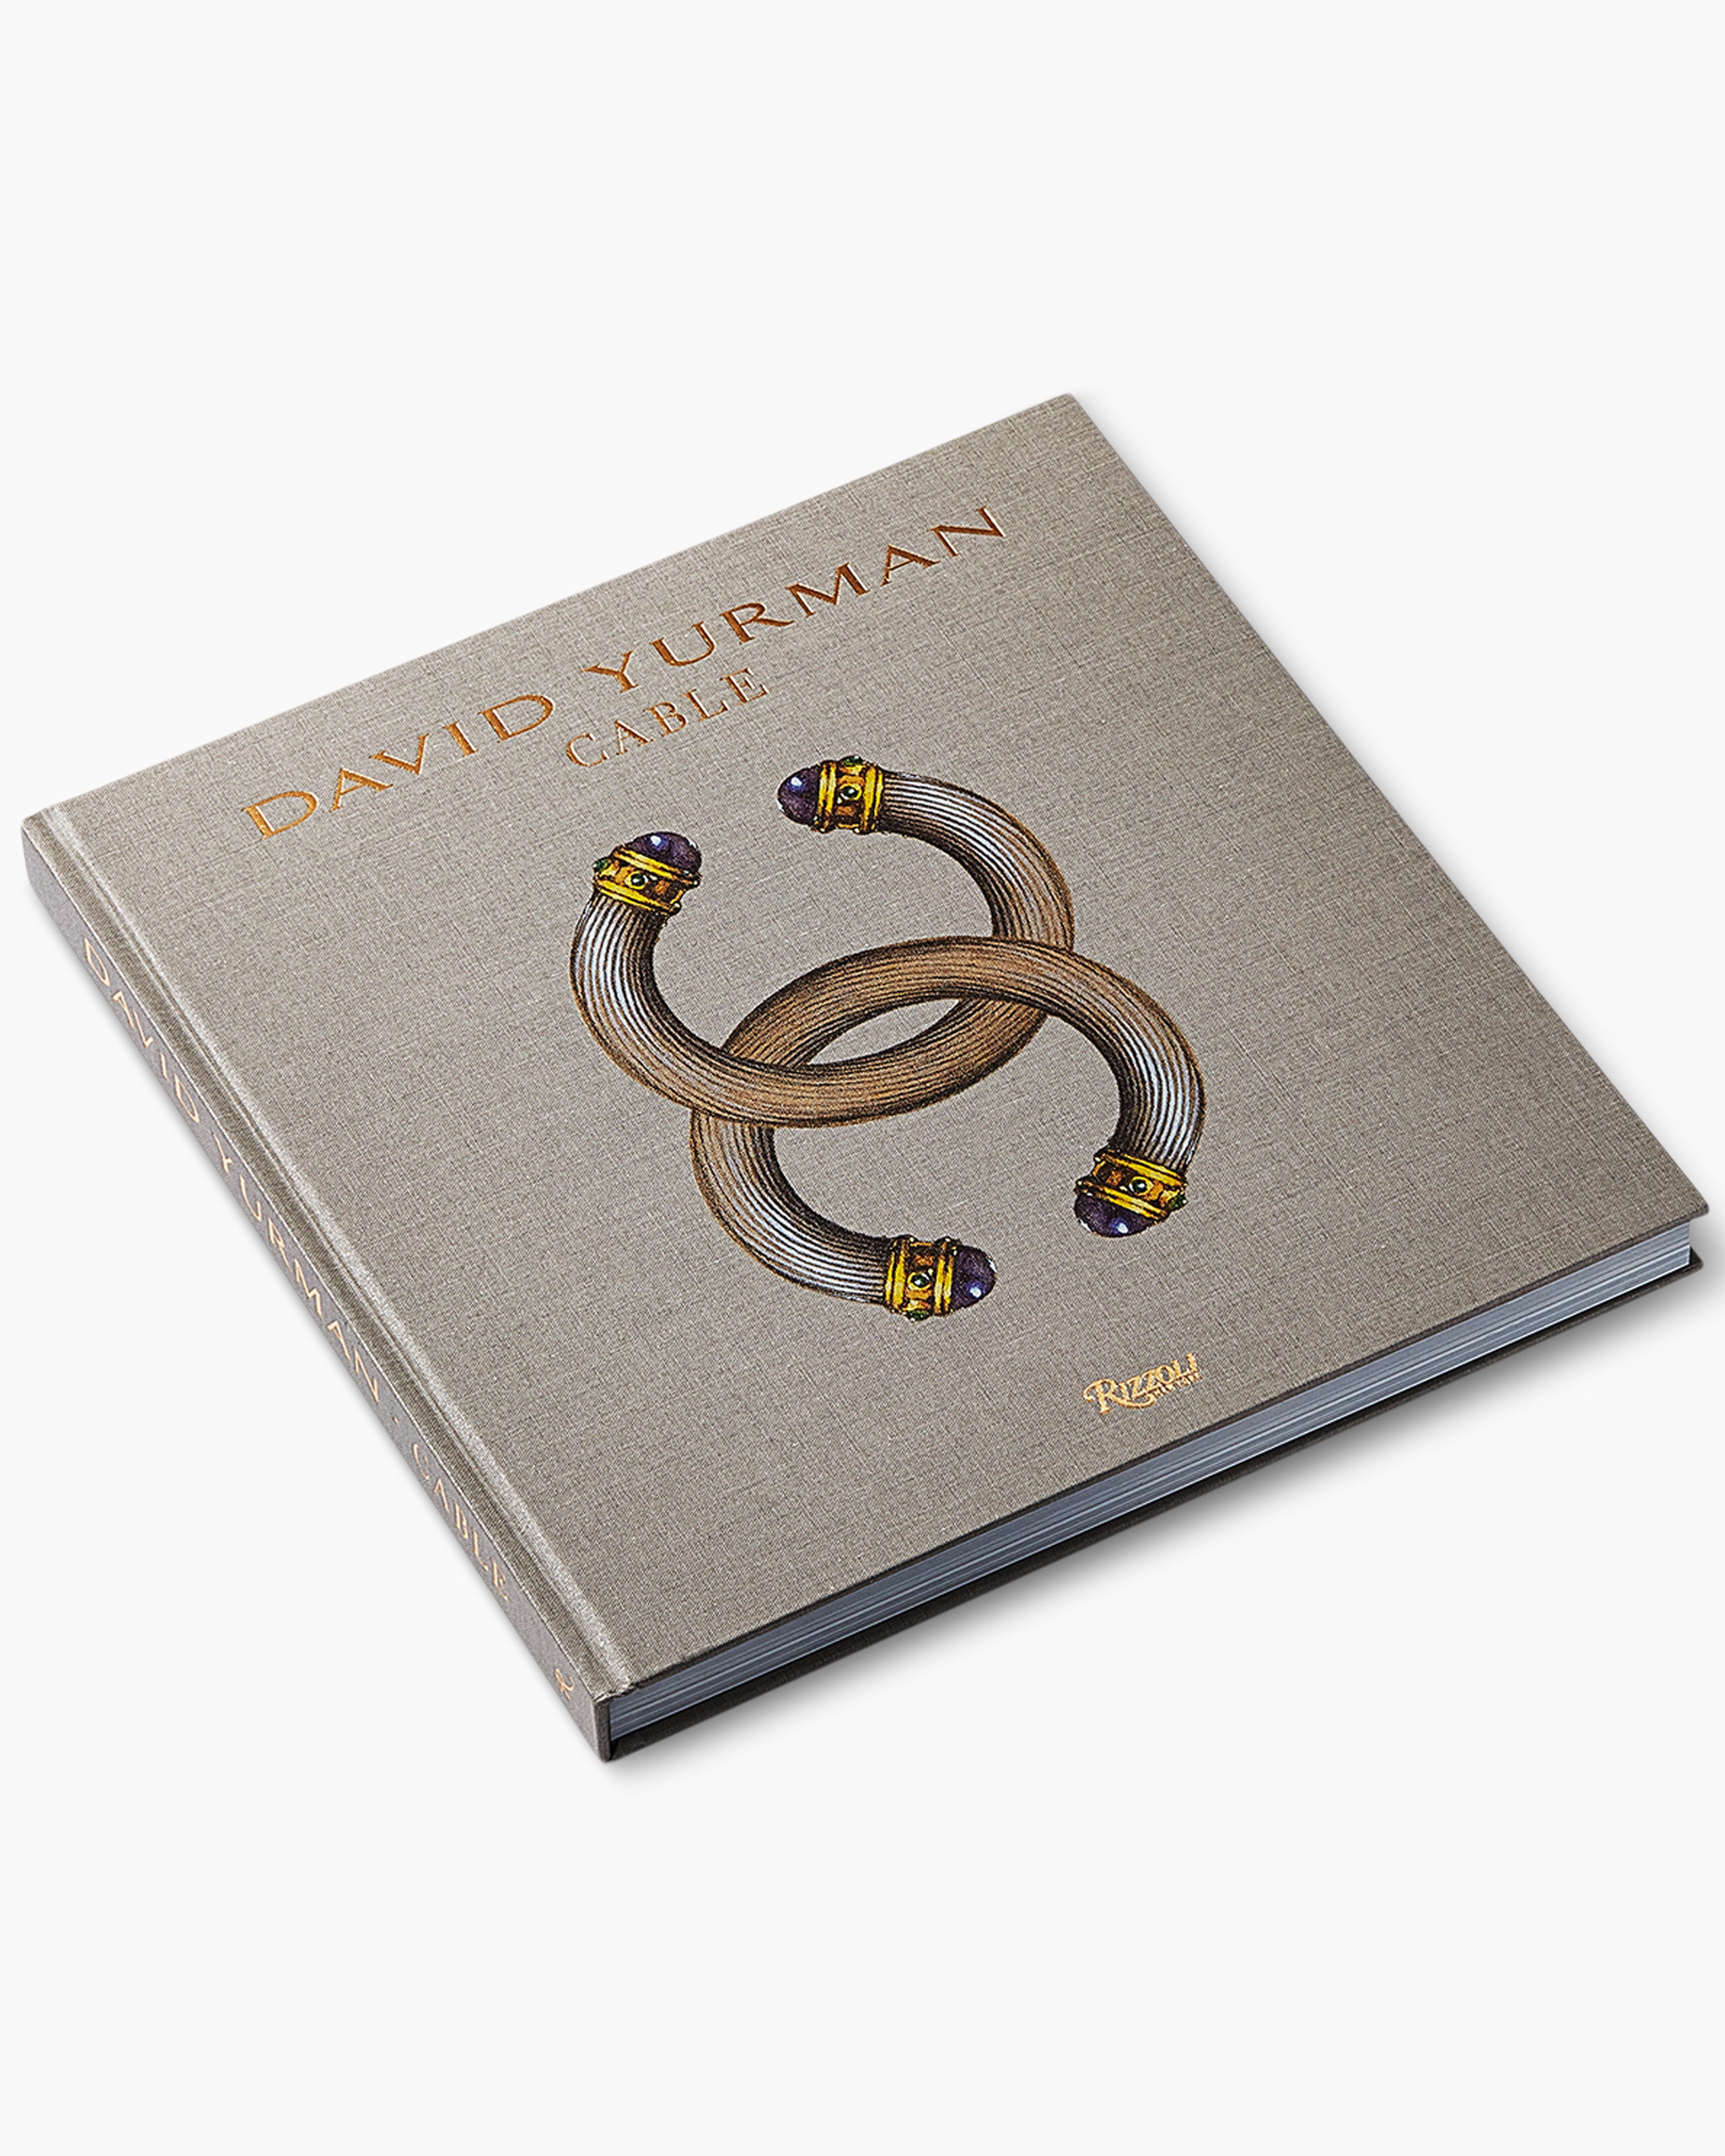 Louis Vuitton: The Birth of Modern Luxury- Designer Fashion Icon Coffee  Table Book